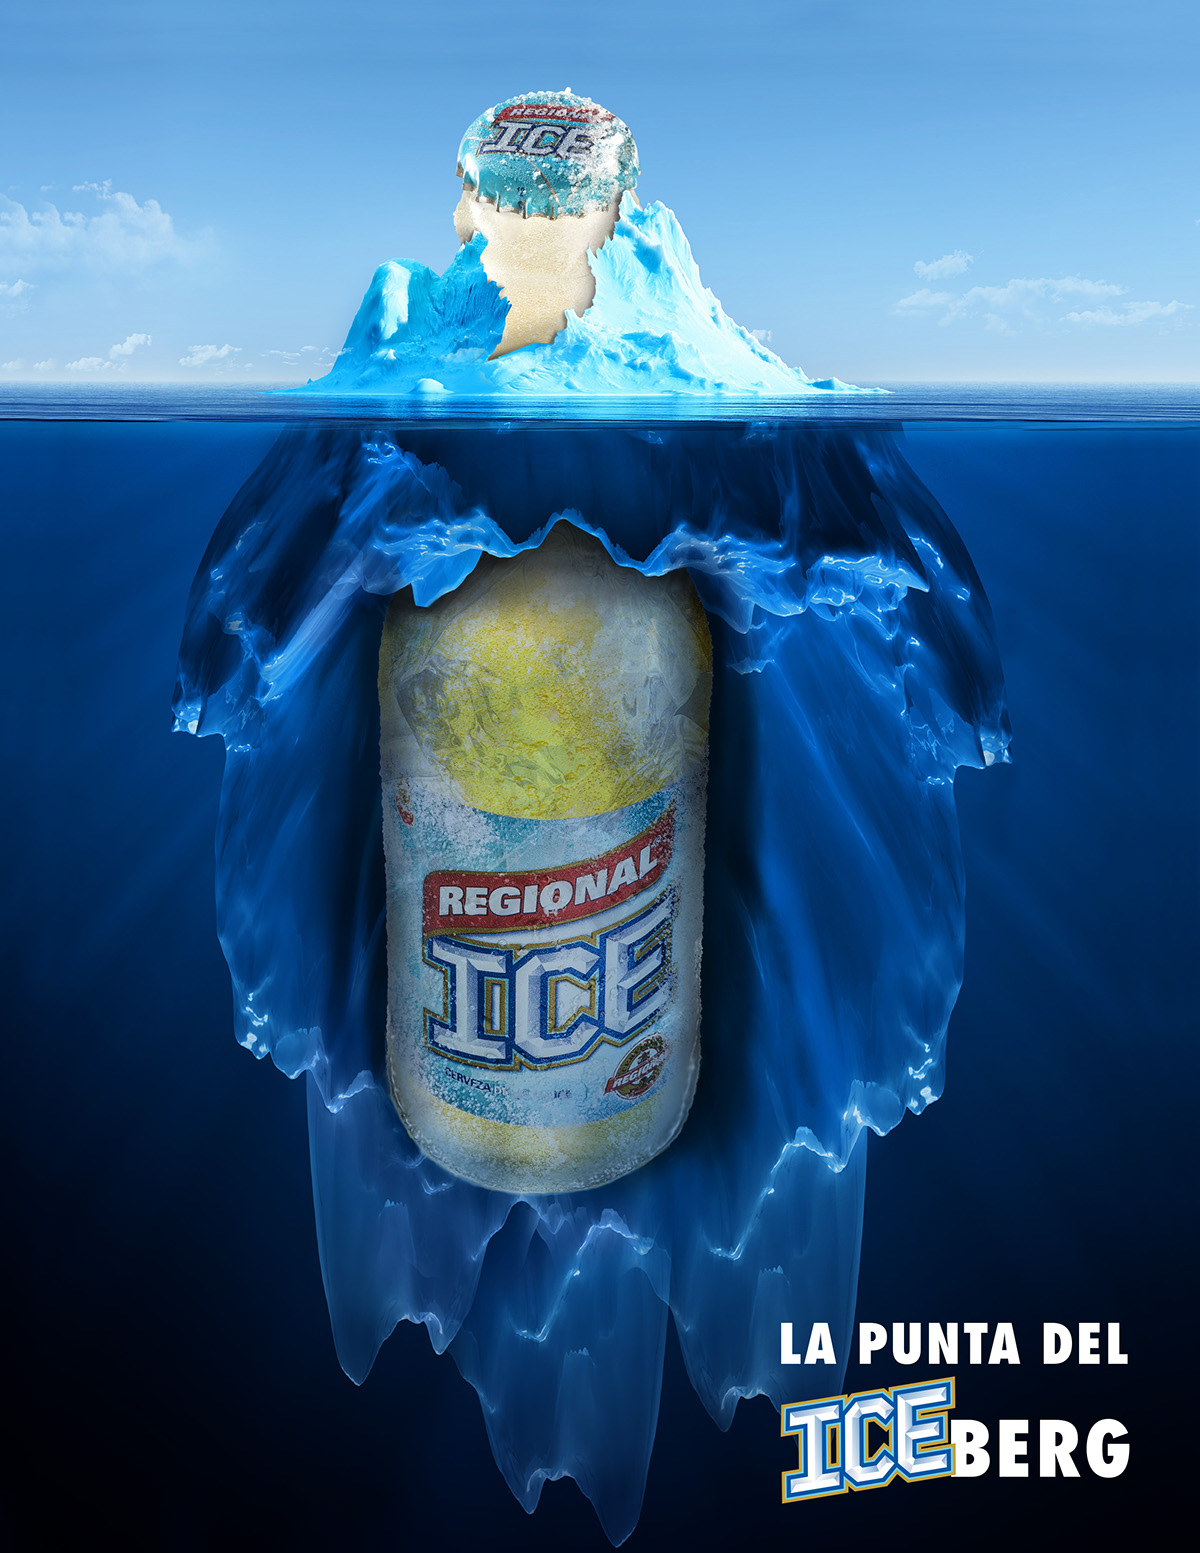 Regional Ice regional ice cerveza beer Birra pola